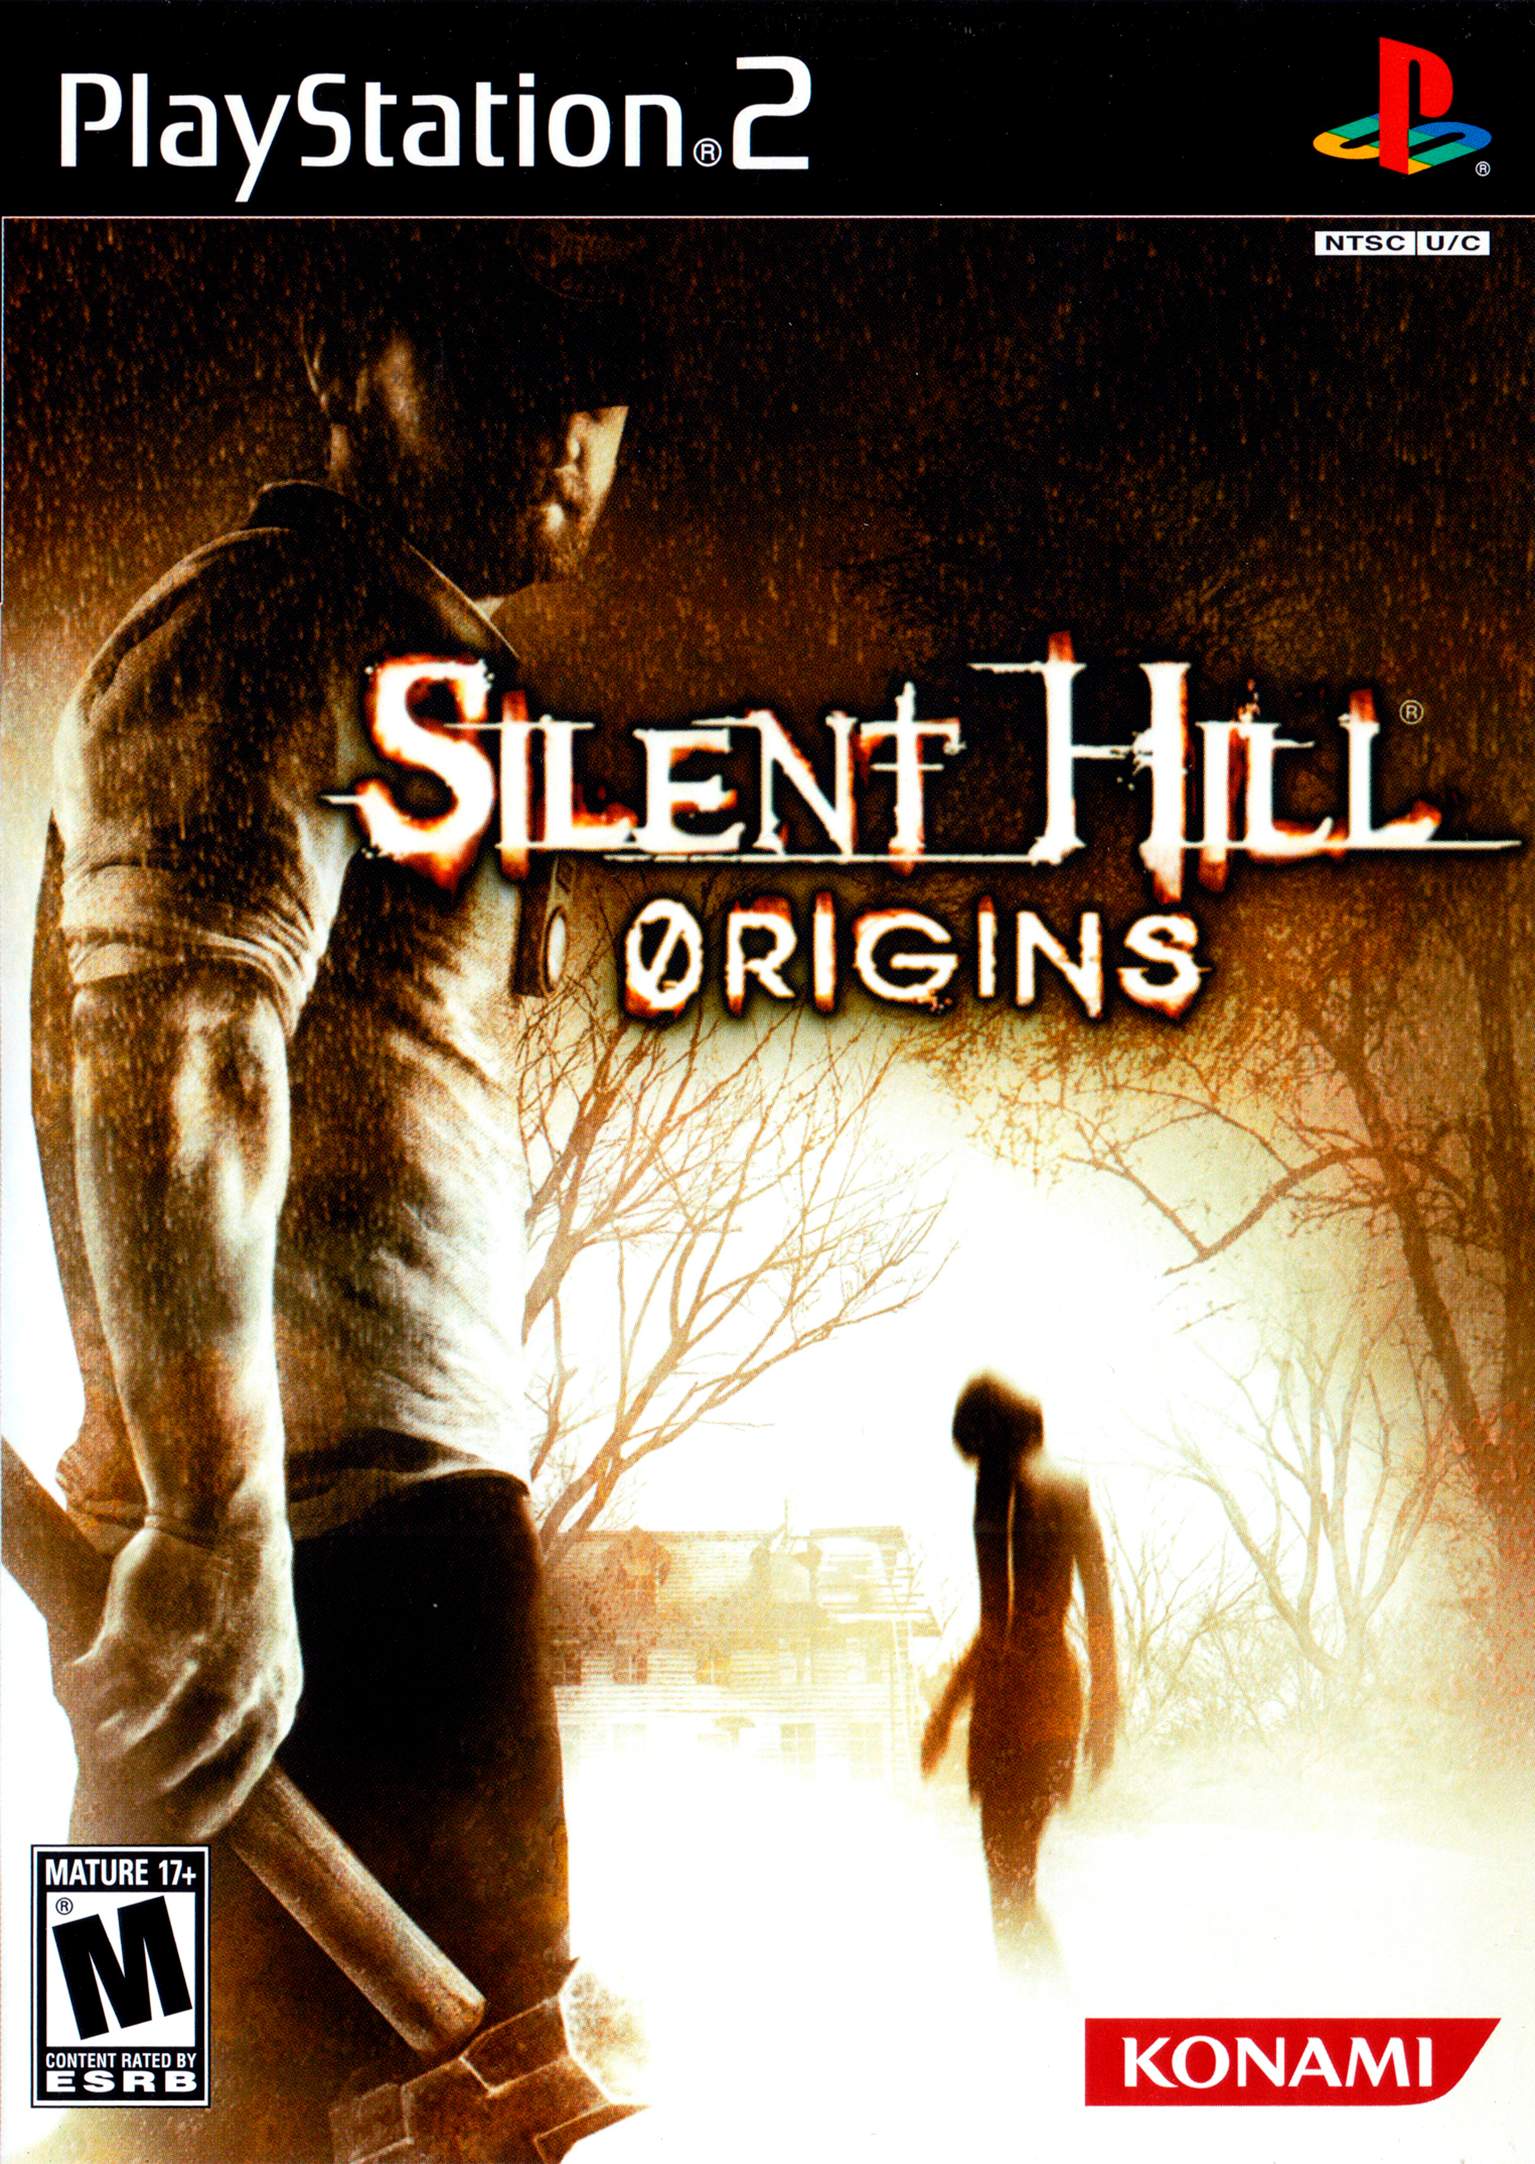 Silent Hill: Origins Details - LaunchBox Games Database